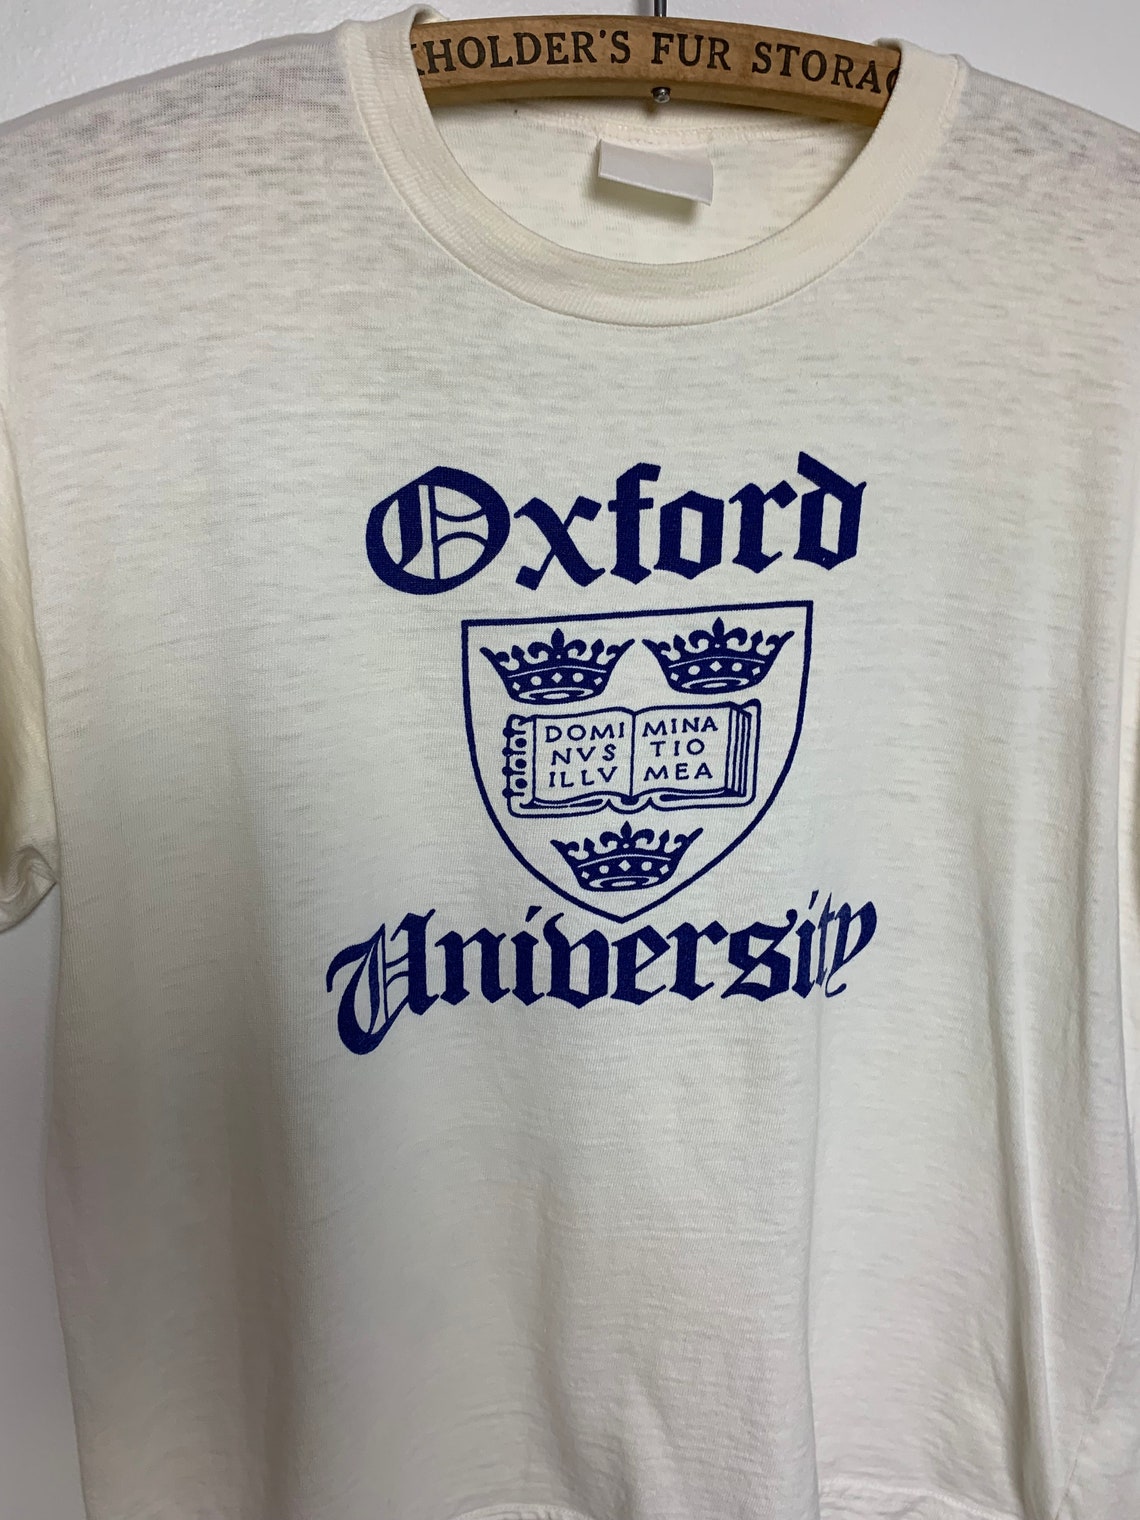 1960s Oxford University T-shirt - Etsy Canada